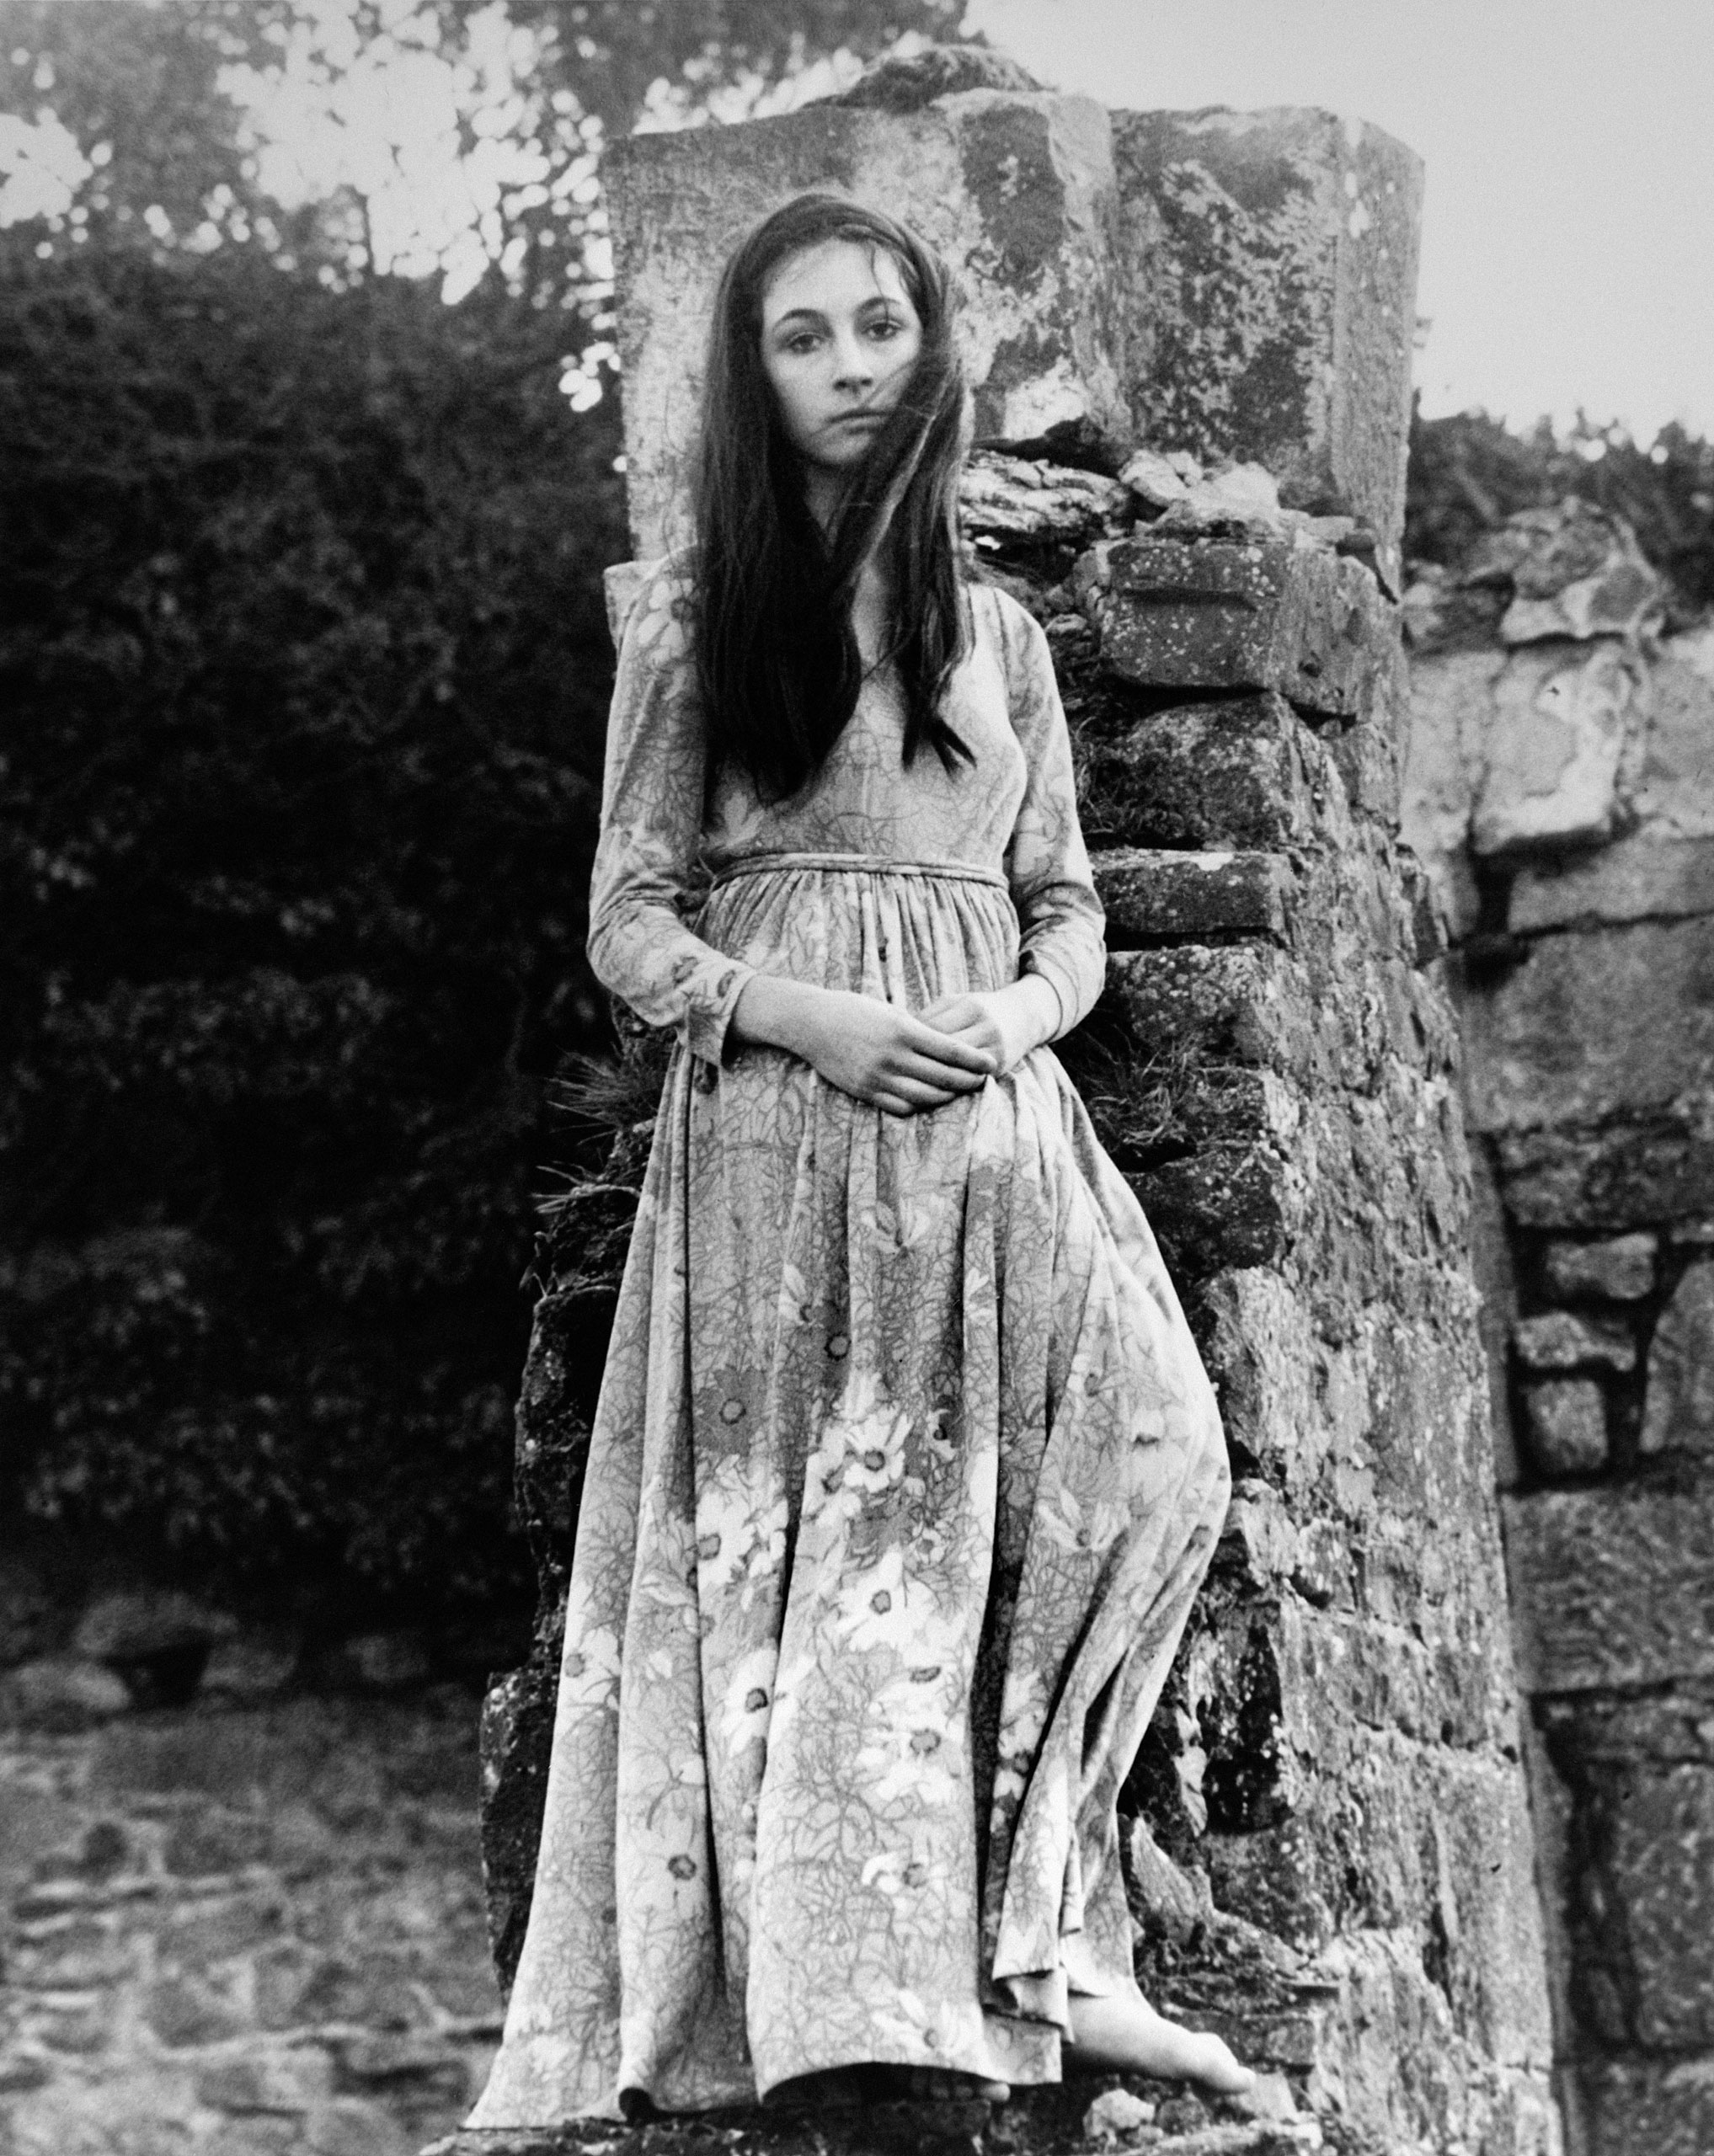 G.B.IRELAND. Angelica Huston at age sixteen. 1968.